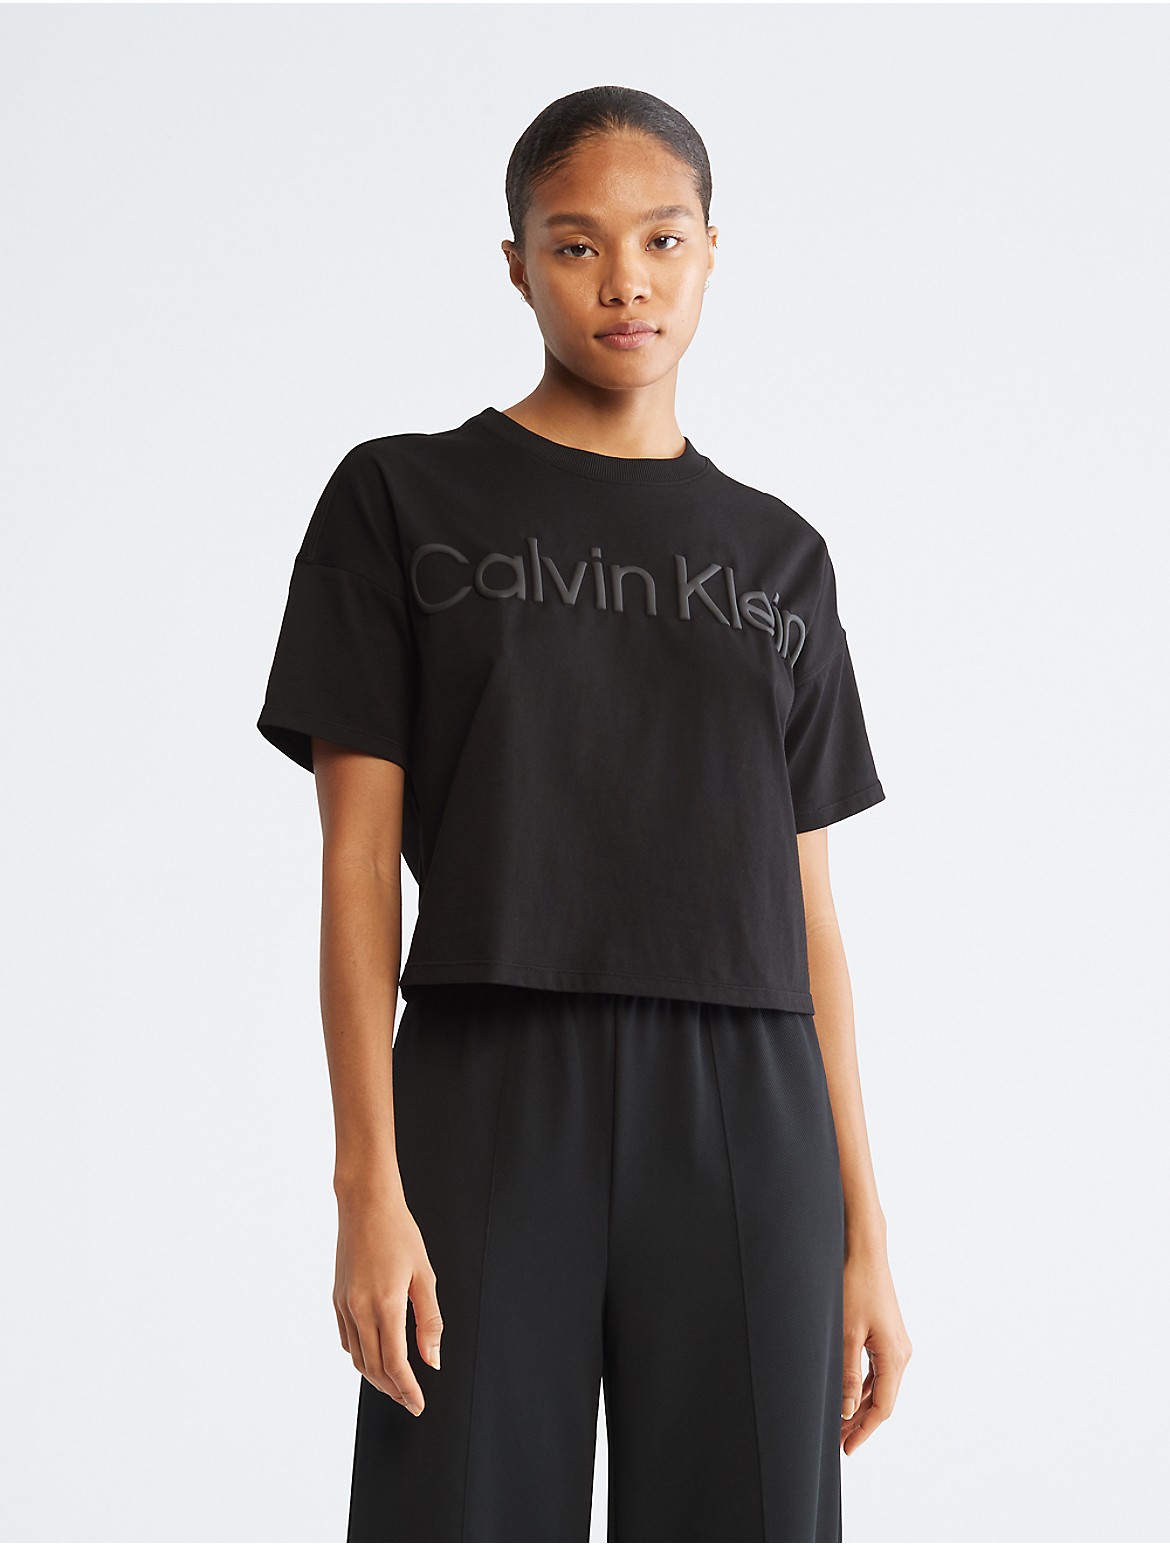 Calvin Klein Women's Puff Logo Crewneck T-Shirt - Black - S